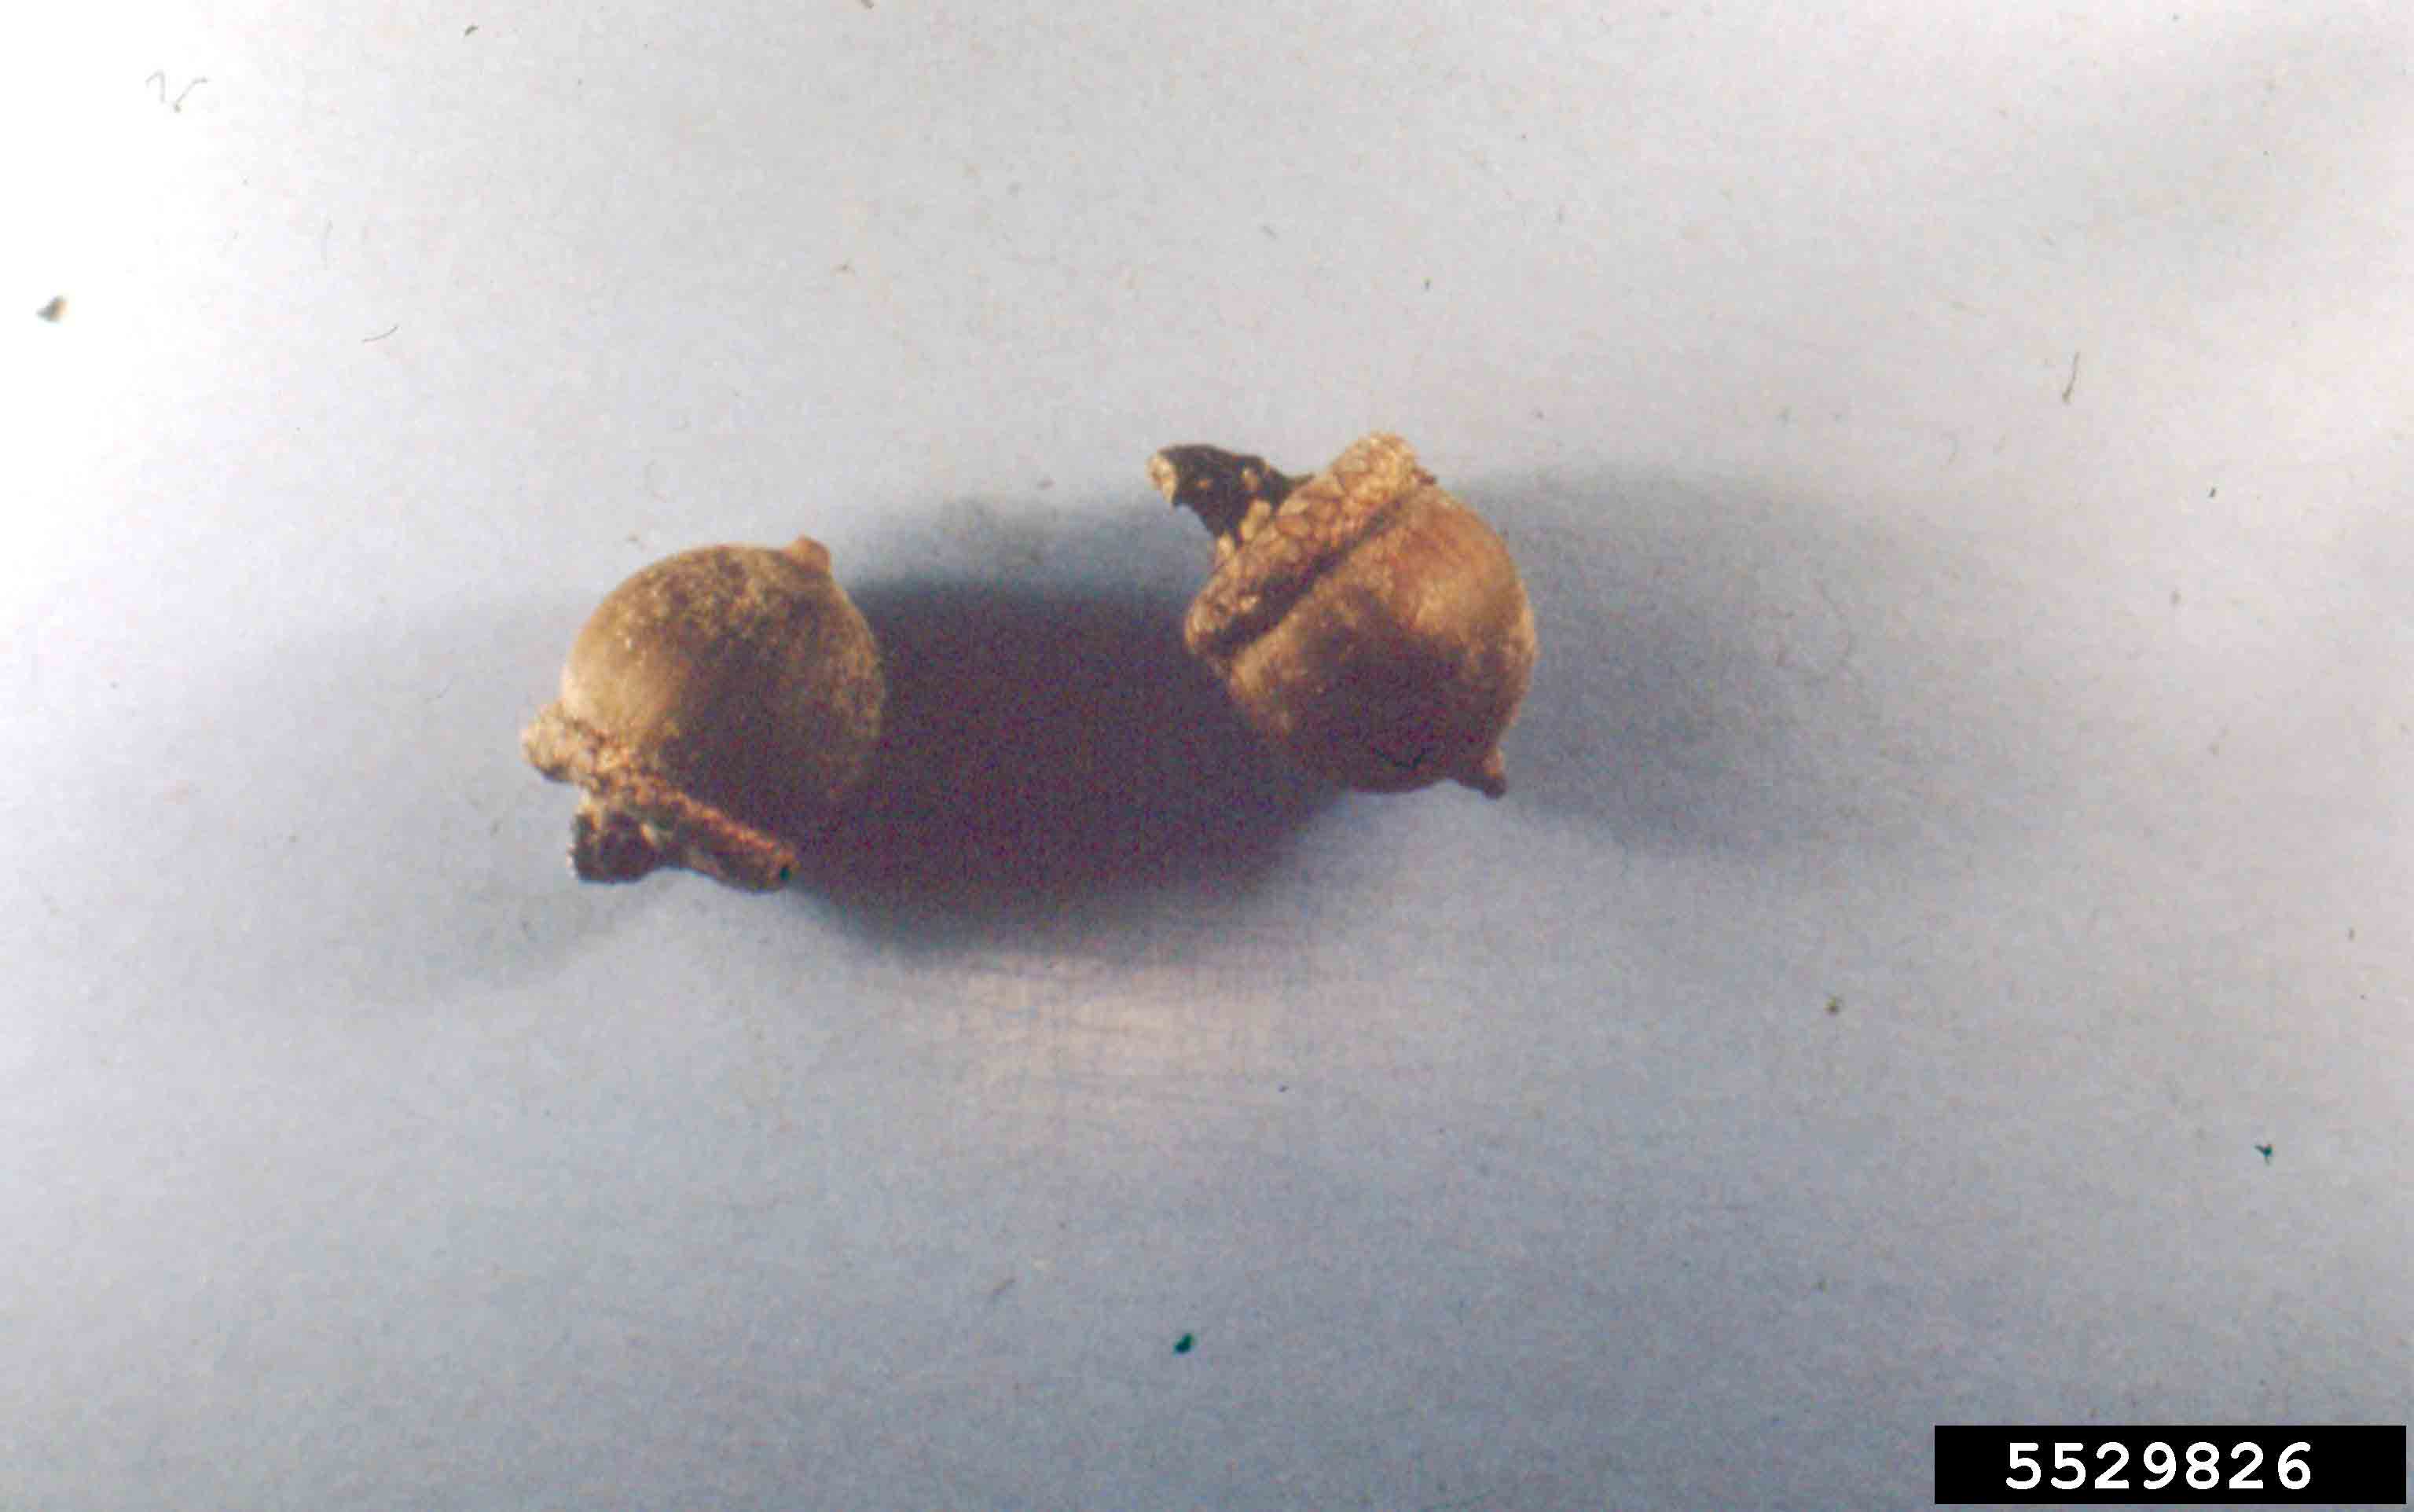 Pin oak acorns, showing shallow cups